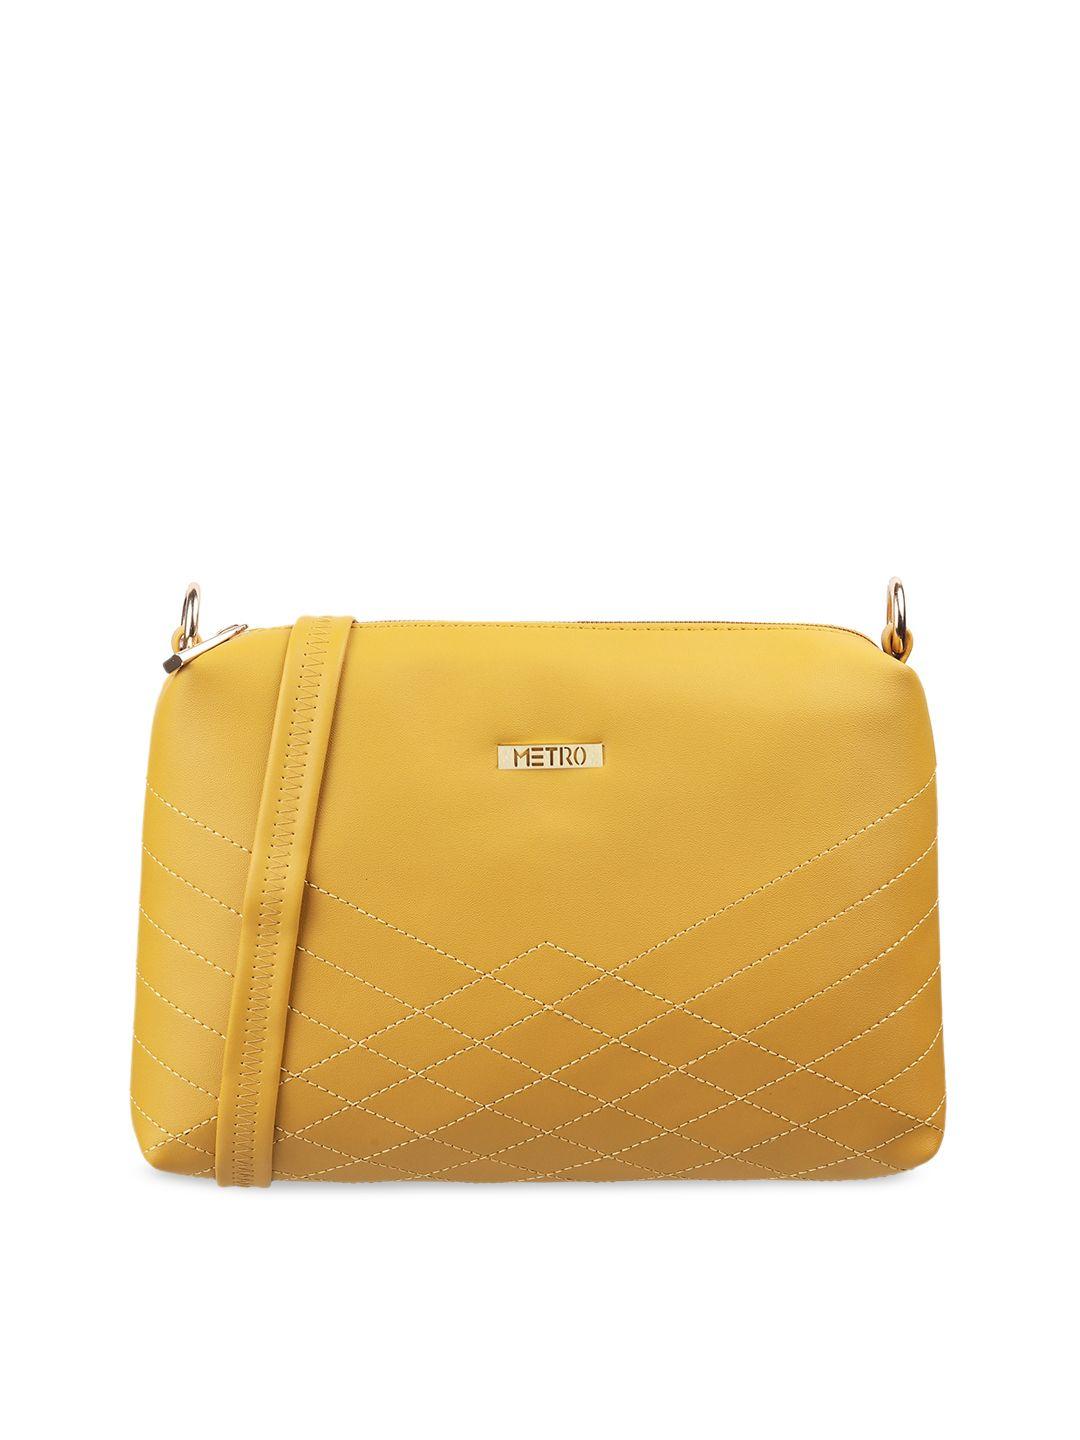 metro yellow structured sling bag